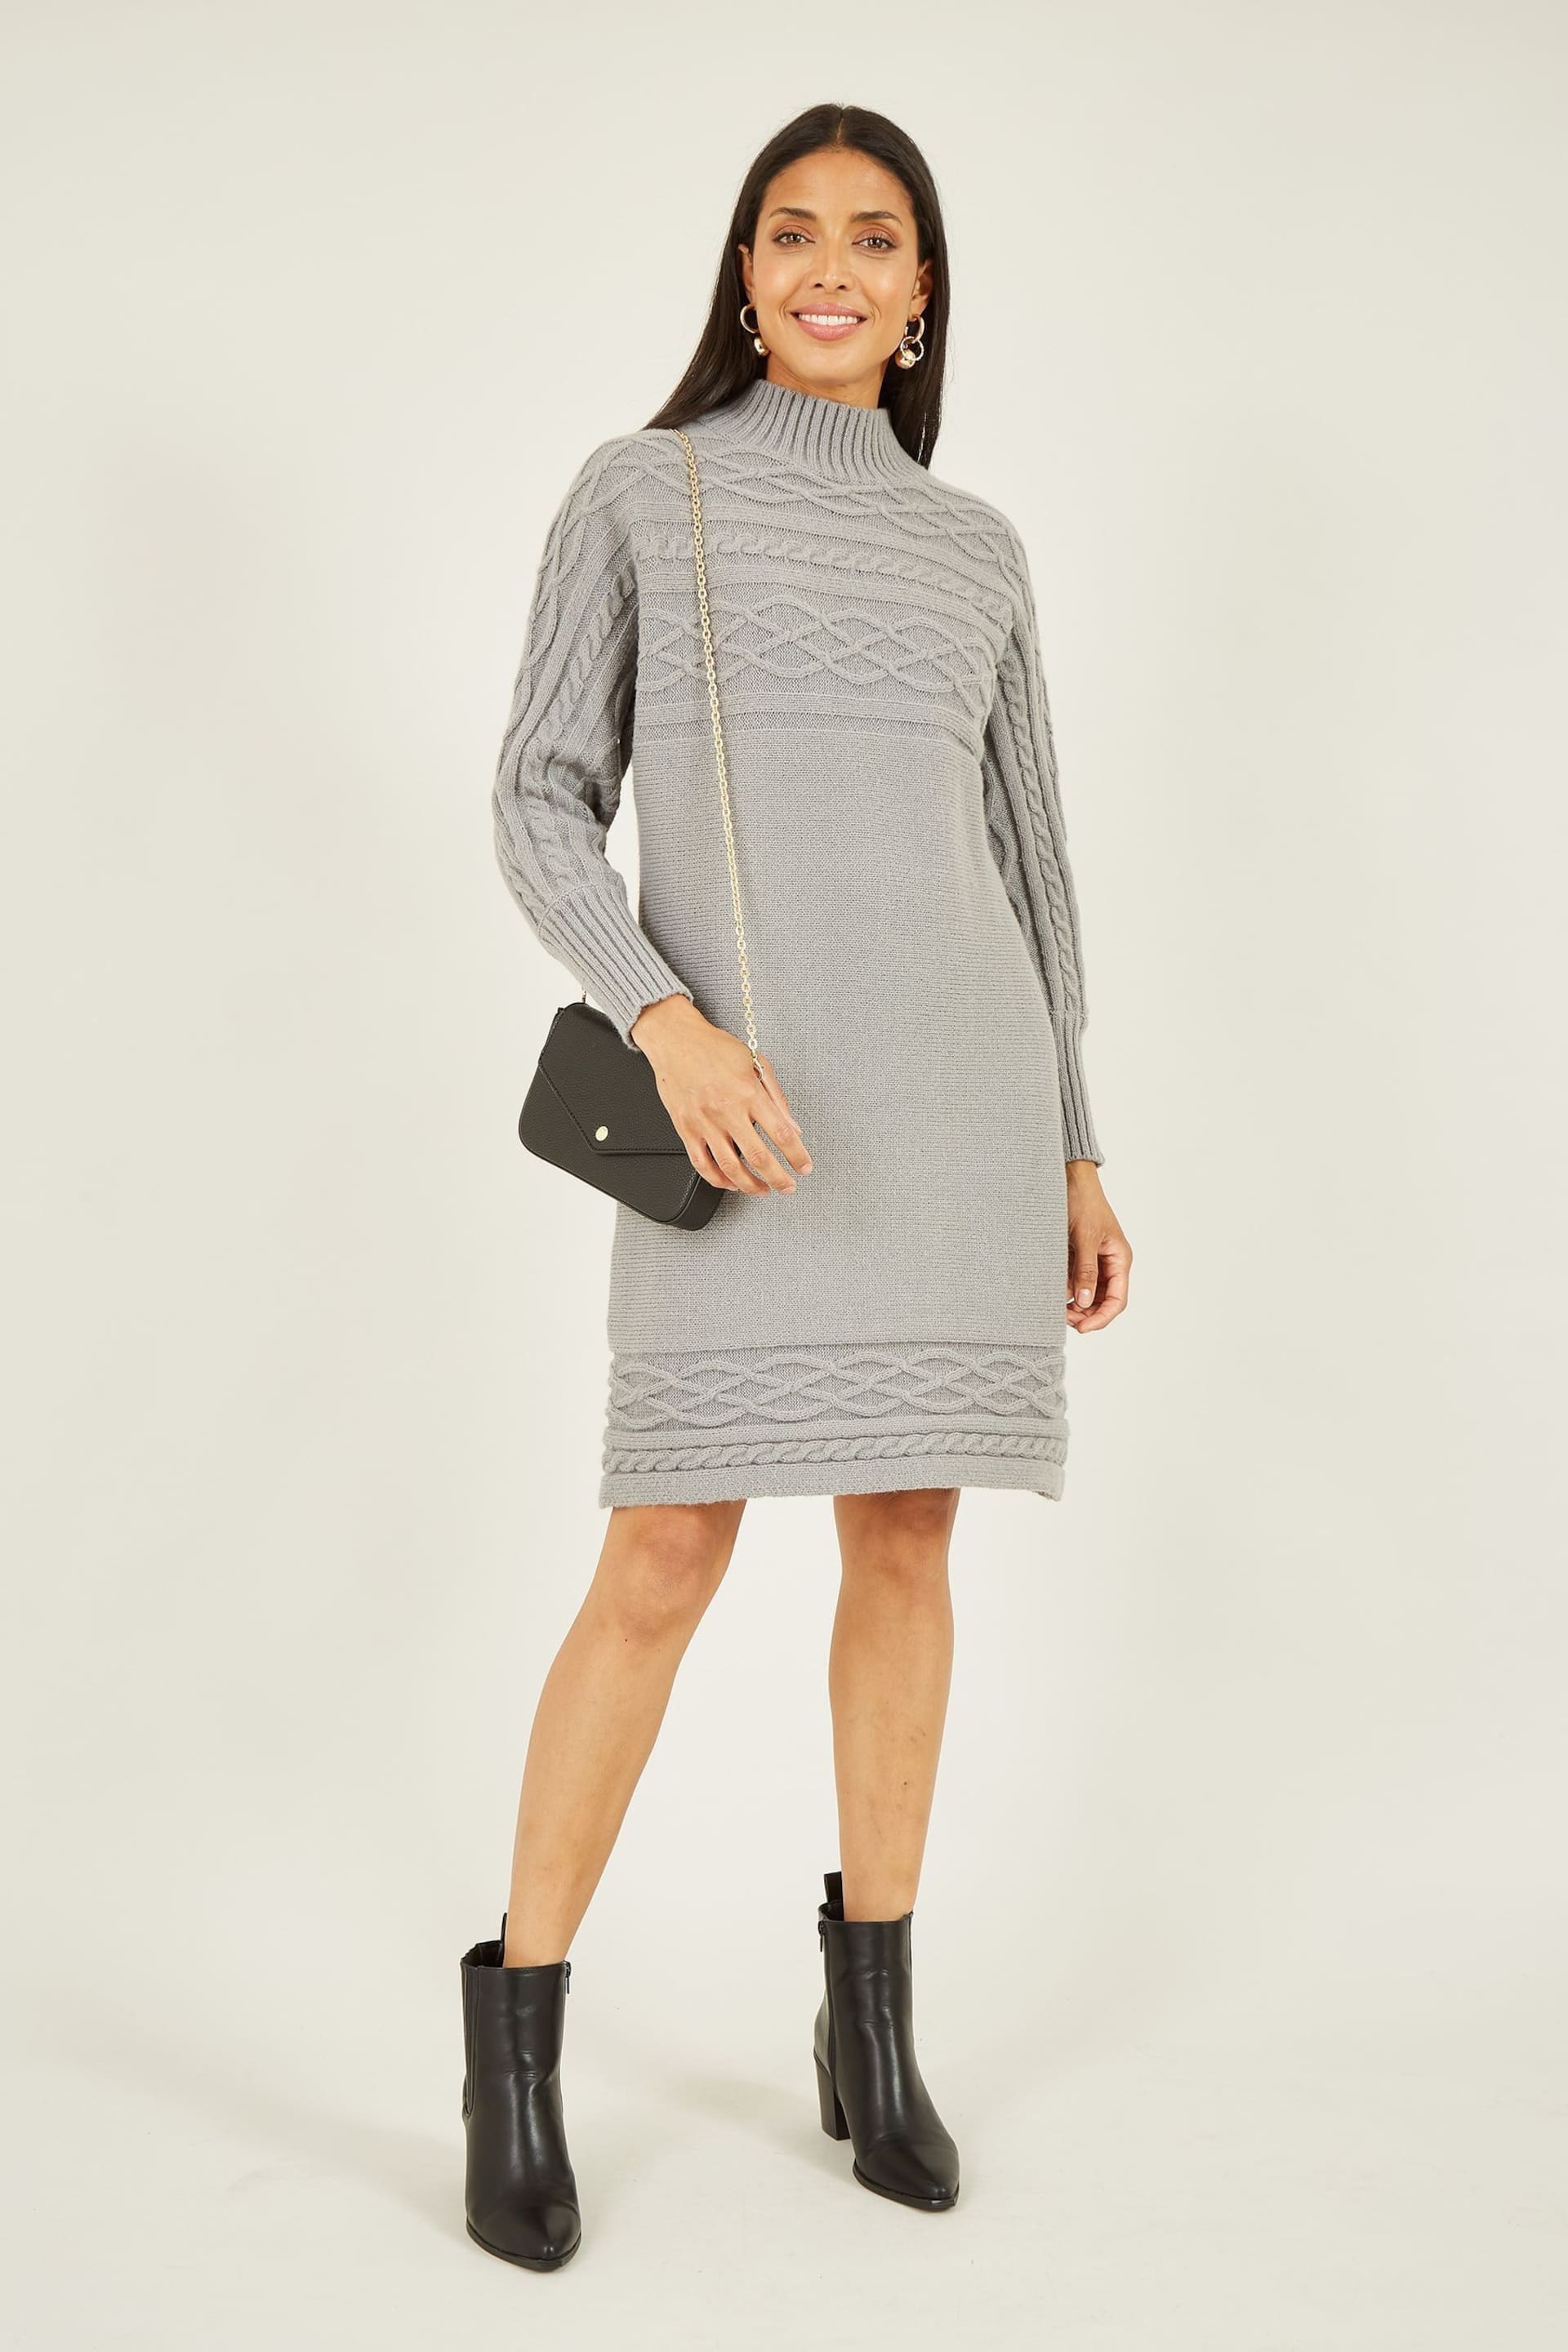 Yumi Grey Cable Knit Tunic Dress - Image 1 of 5